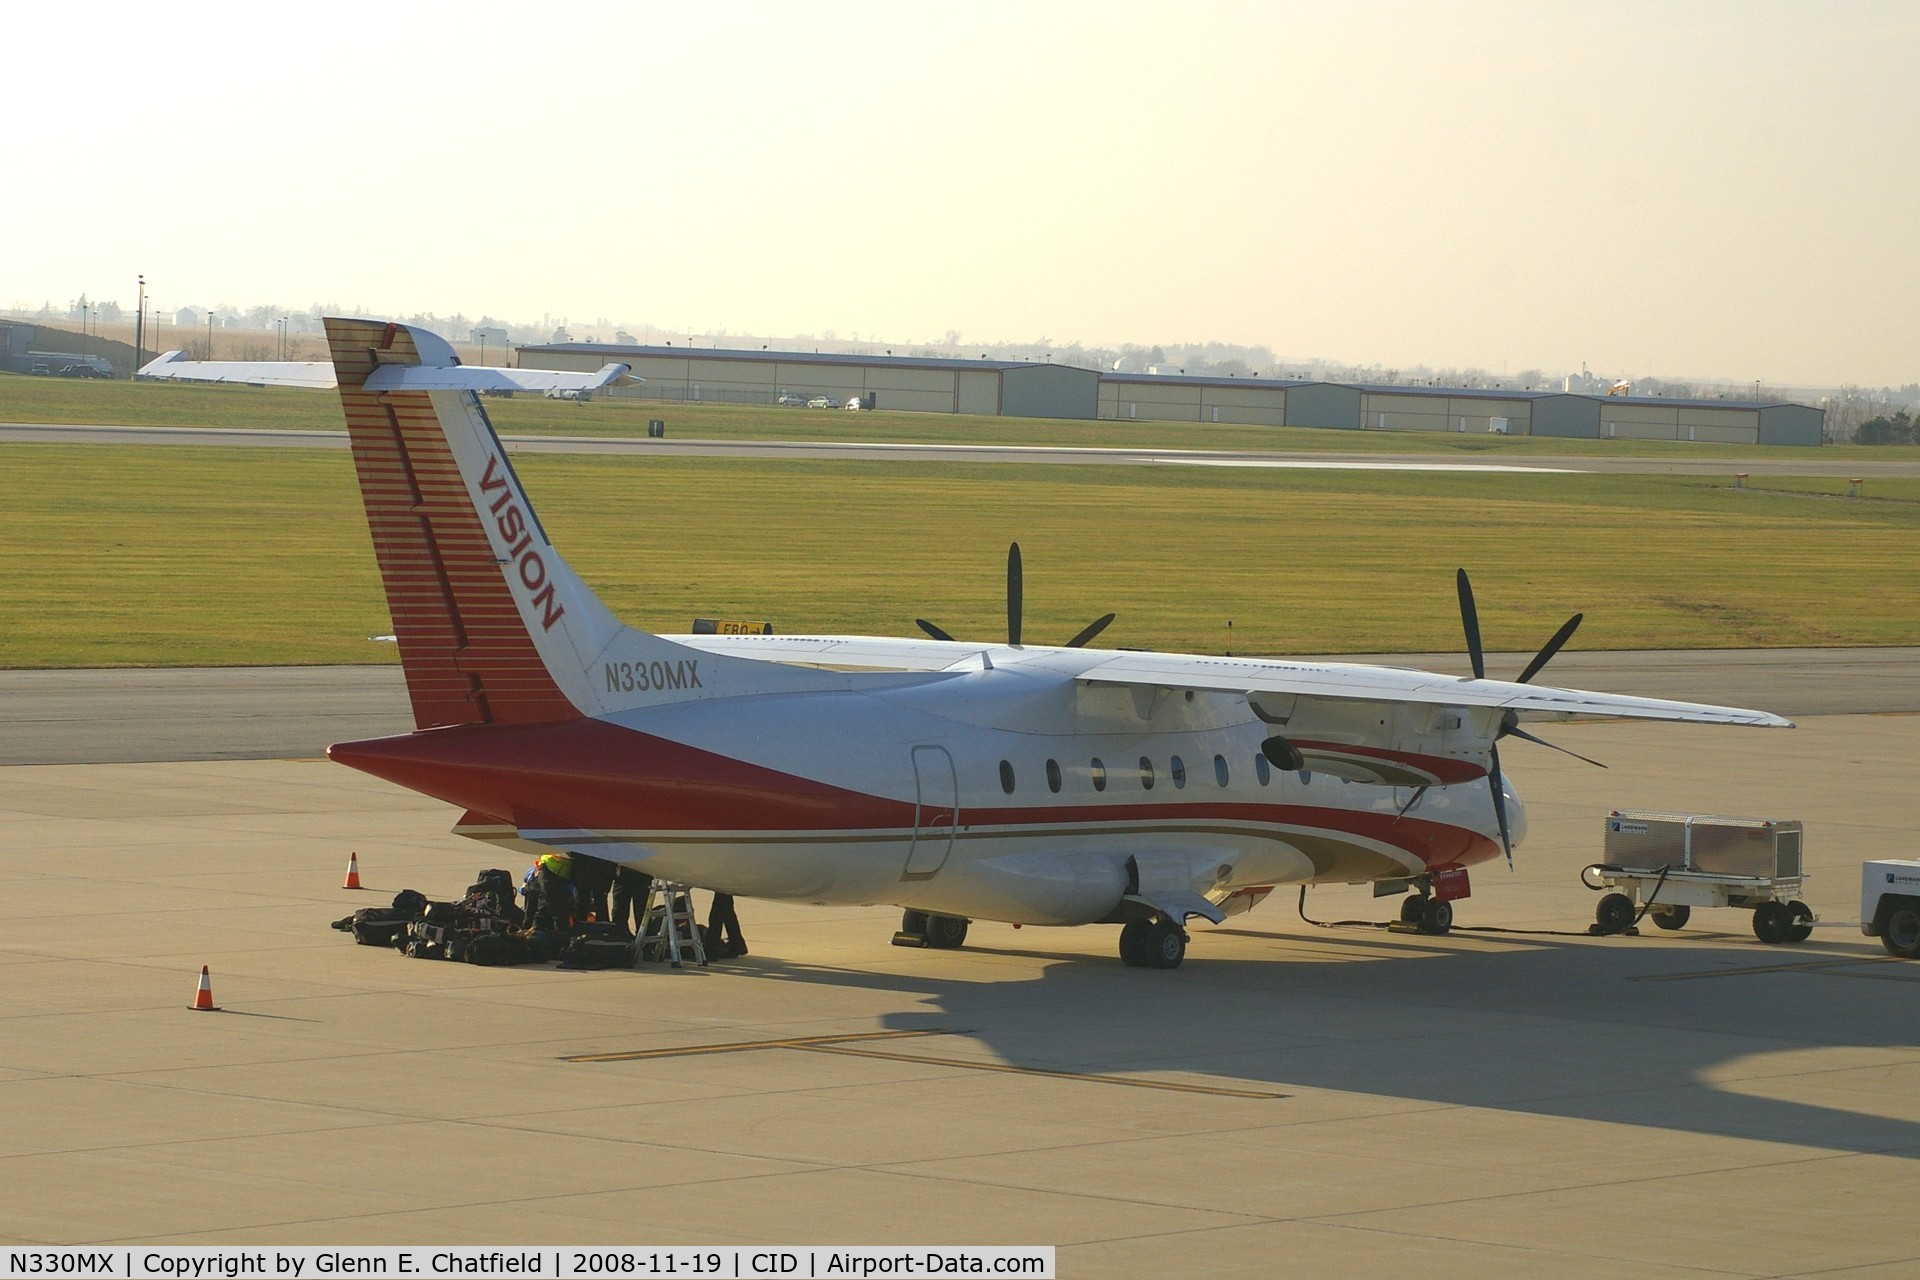 N330MX, 1996 Dornier 328-100 C/N 3067, Loading the team baggage - I don't know which U of Iowa team.